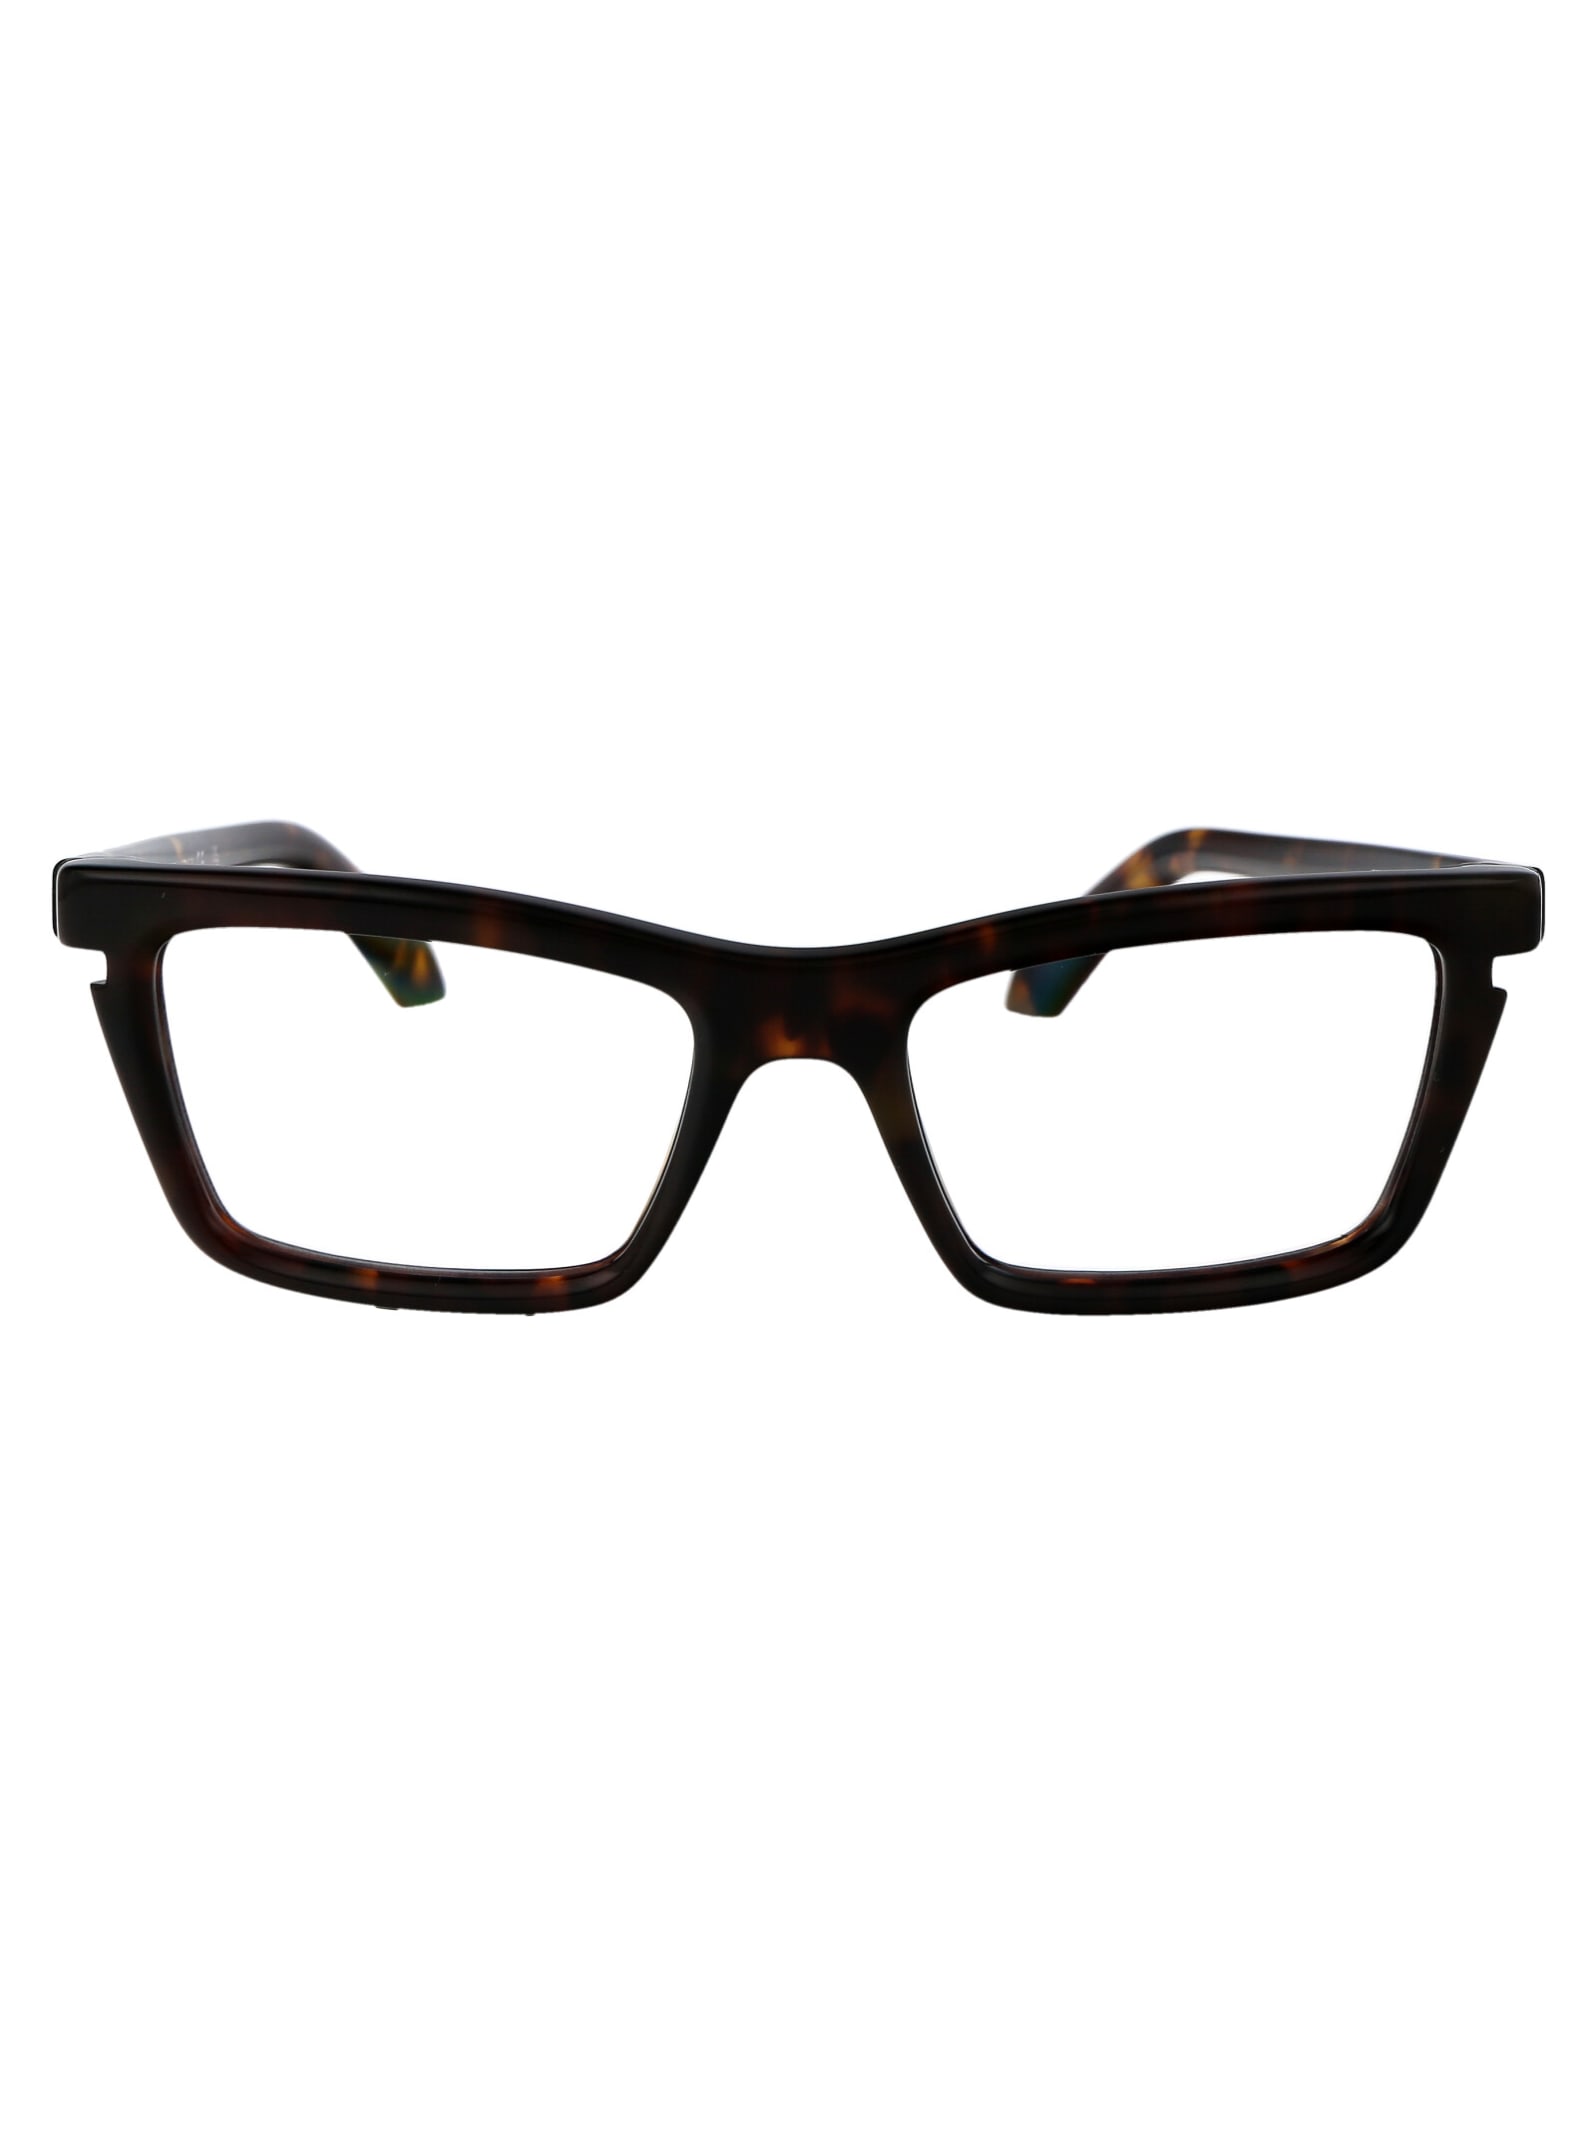 Optical Style 50 Glasses